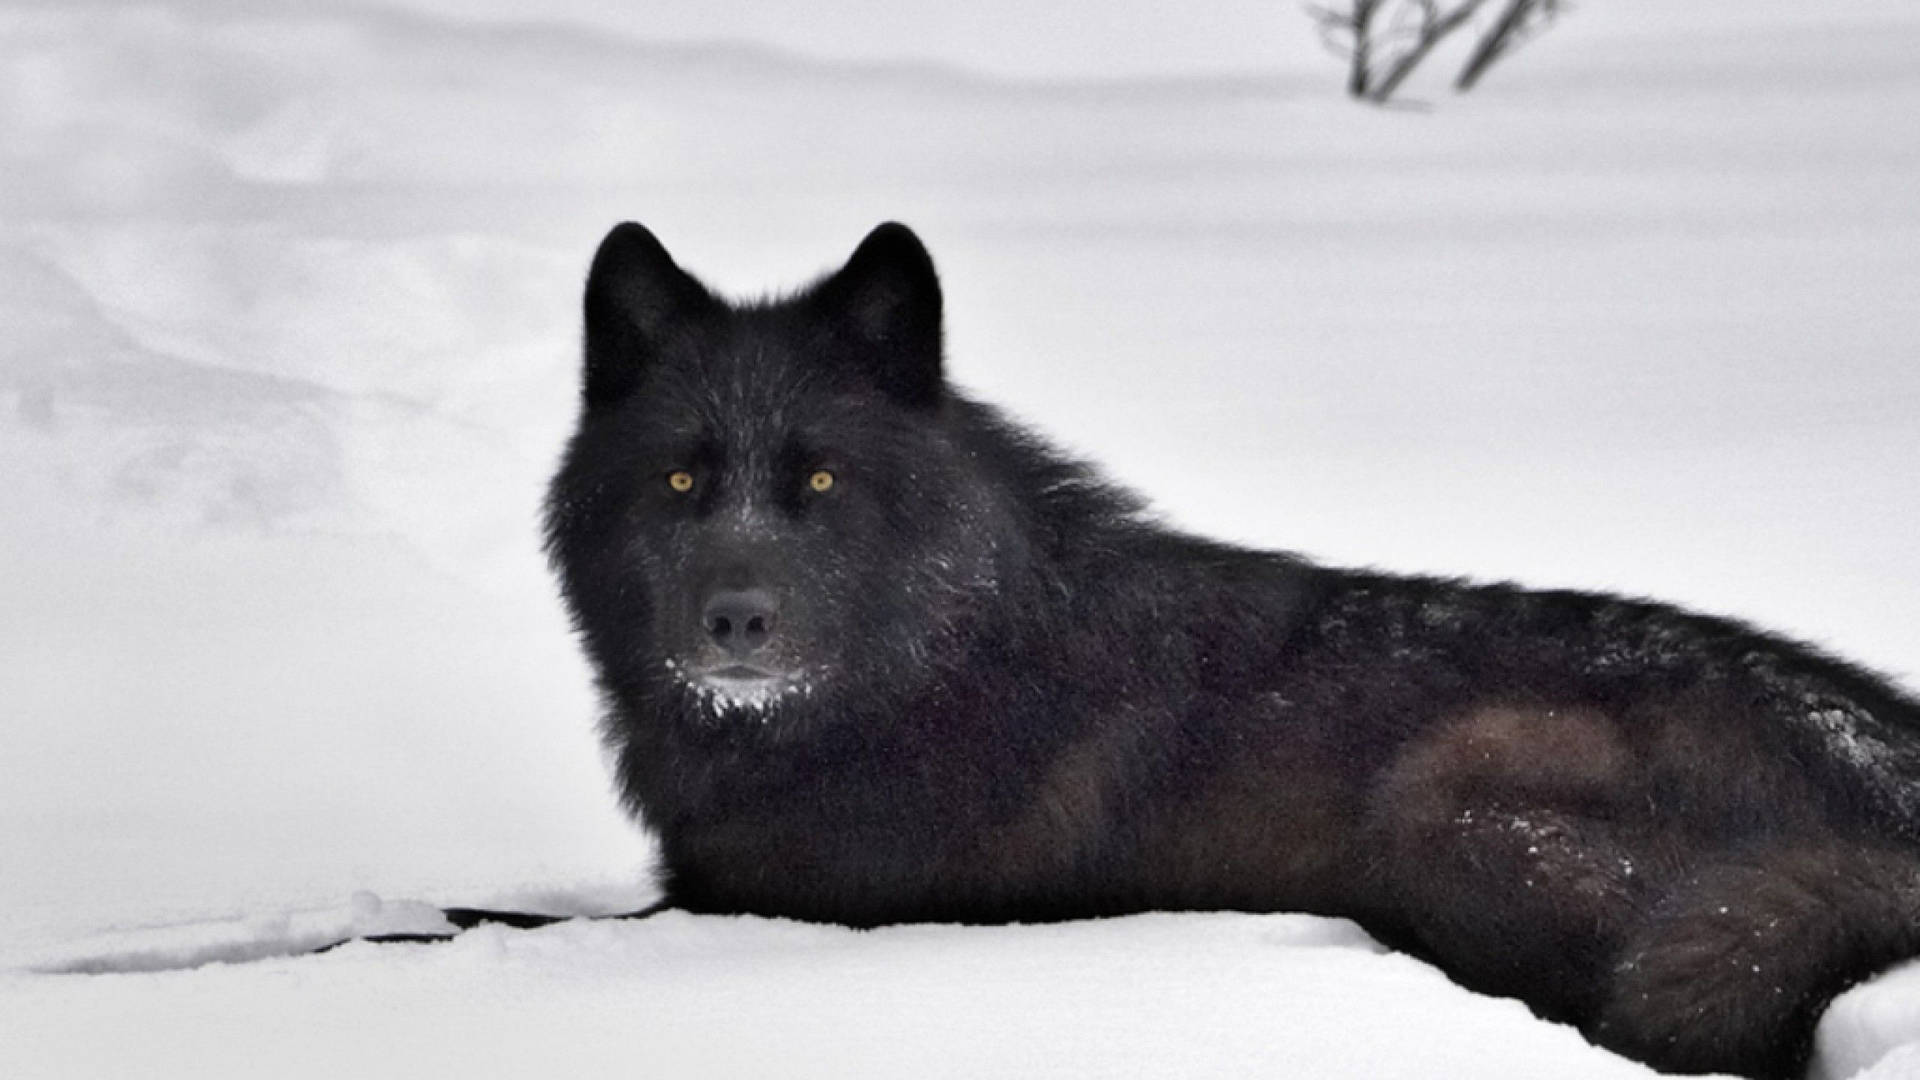 Black Wolf In Snow Wallpaper